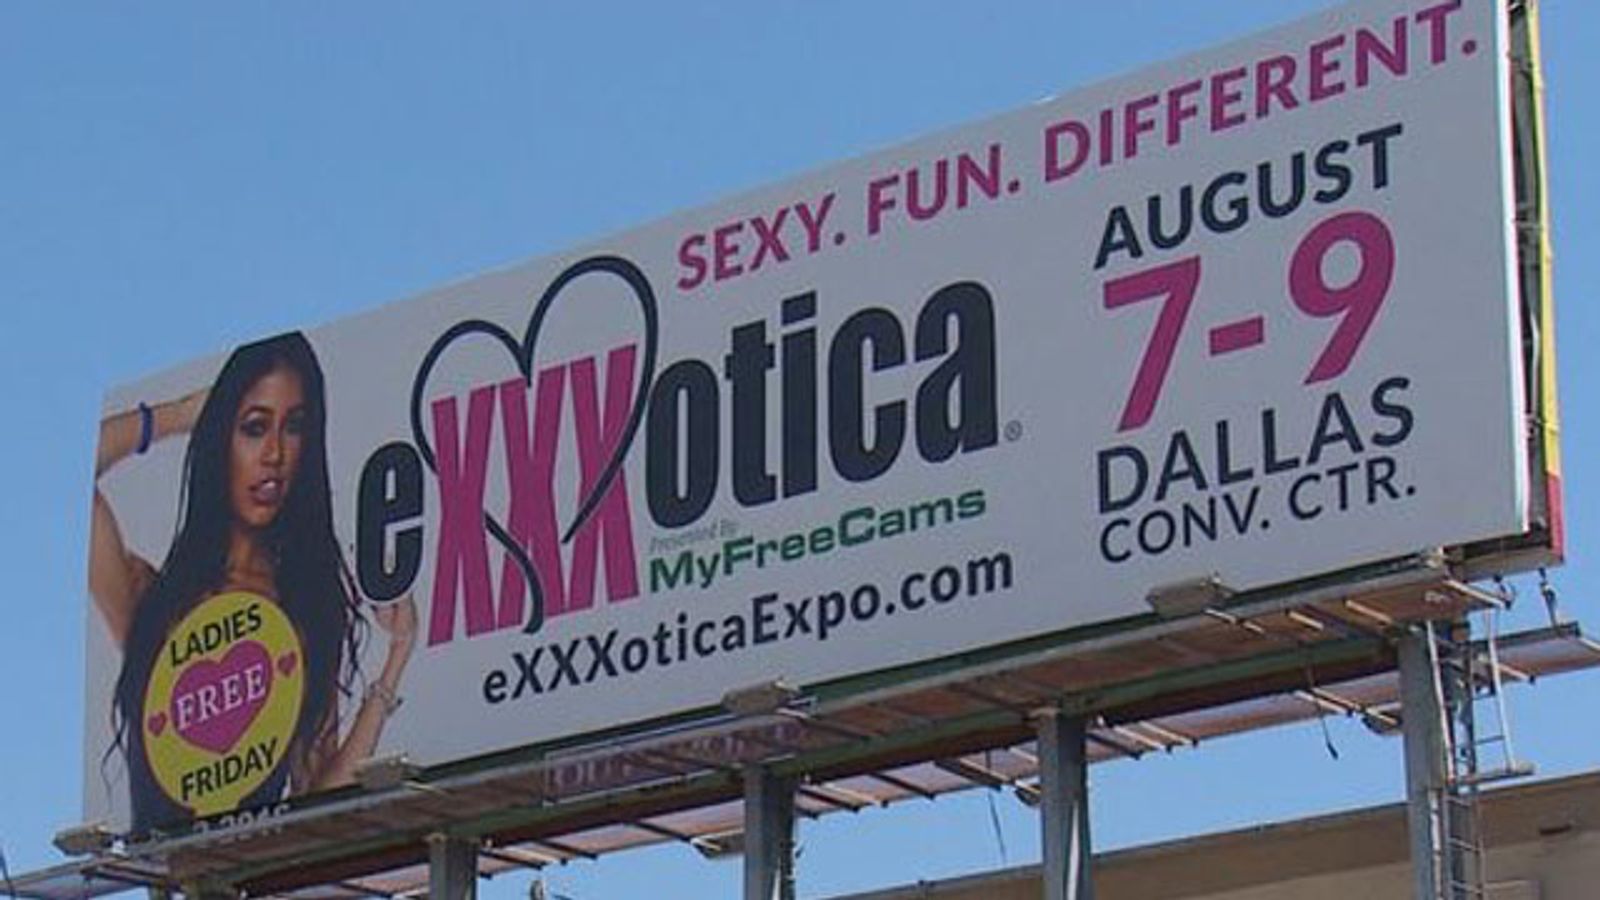 Exxxotica Expo Hitting Nerves in Dallas